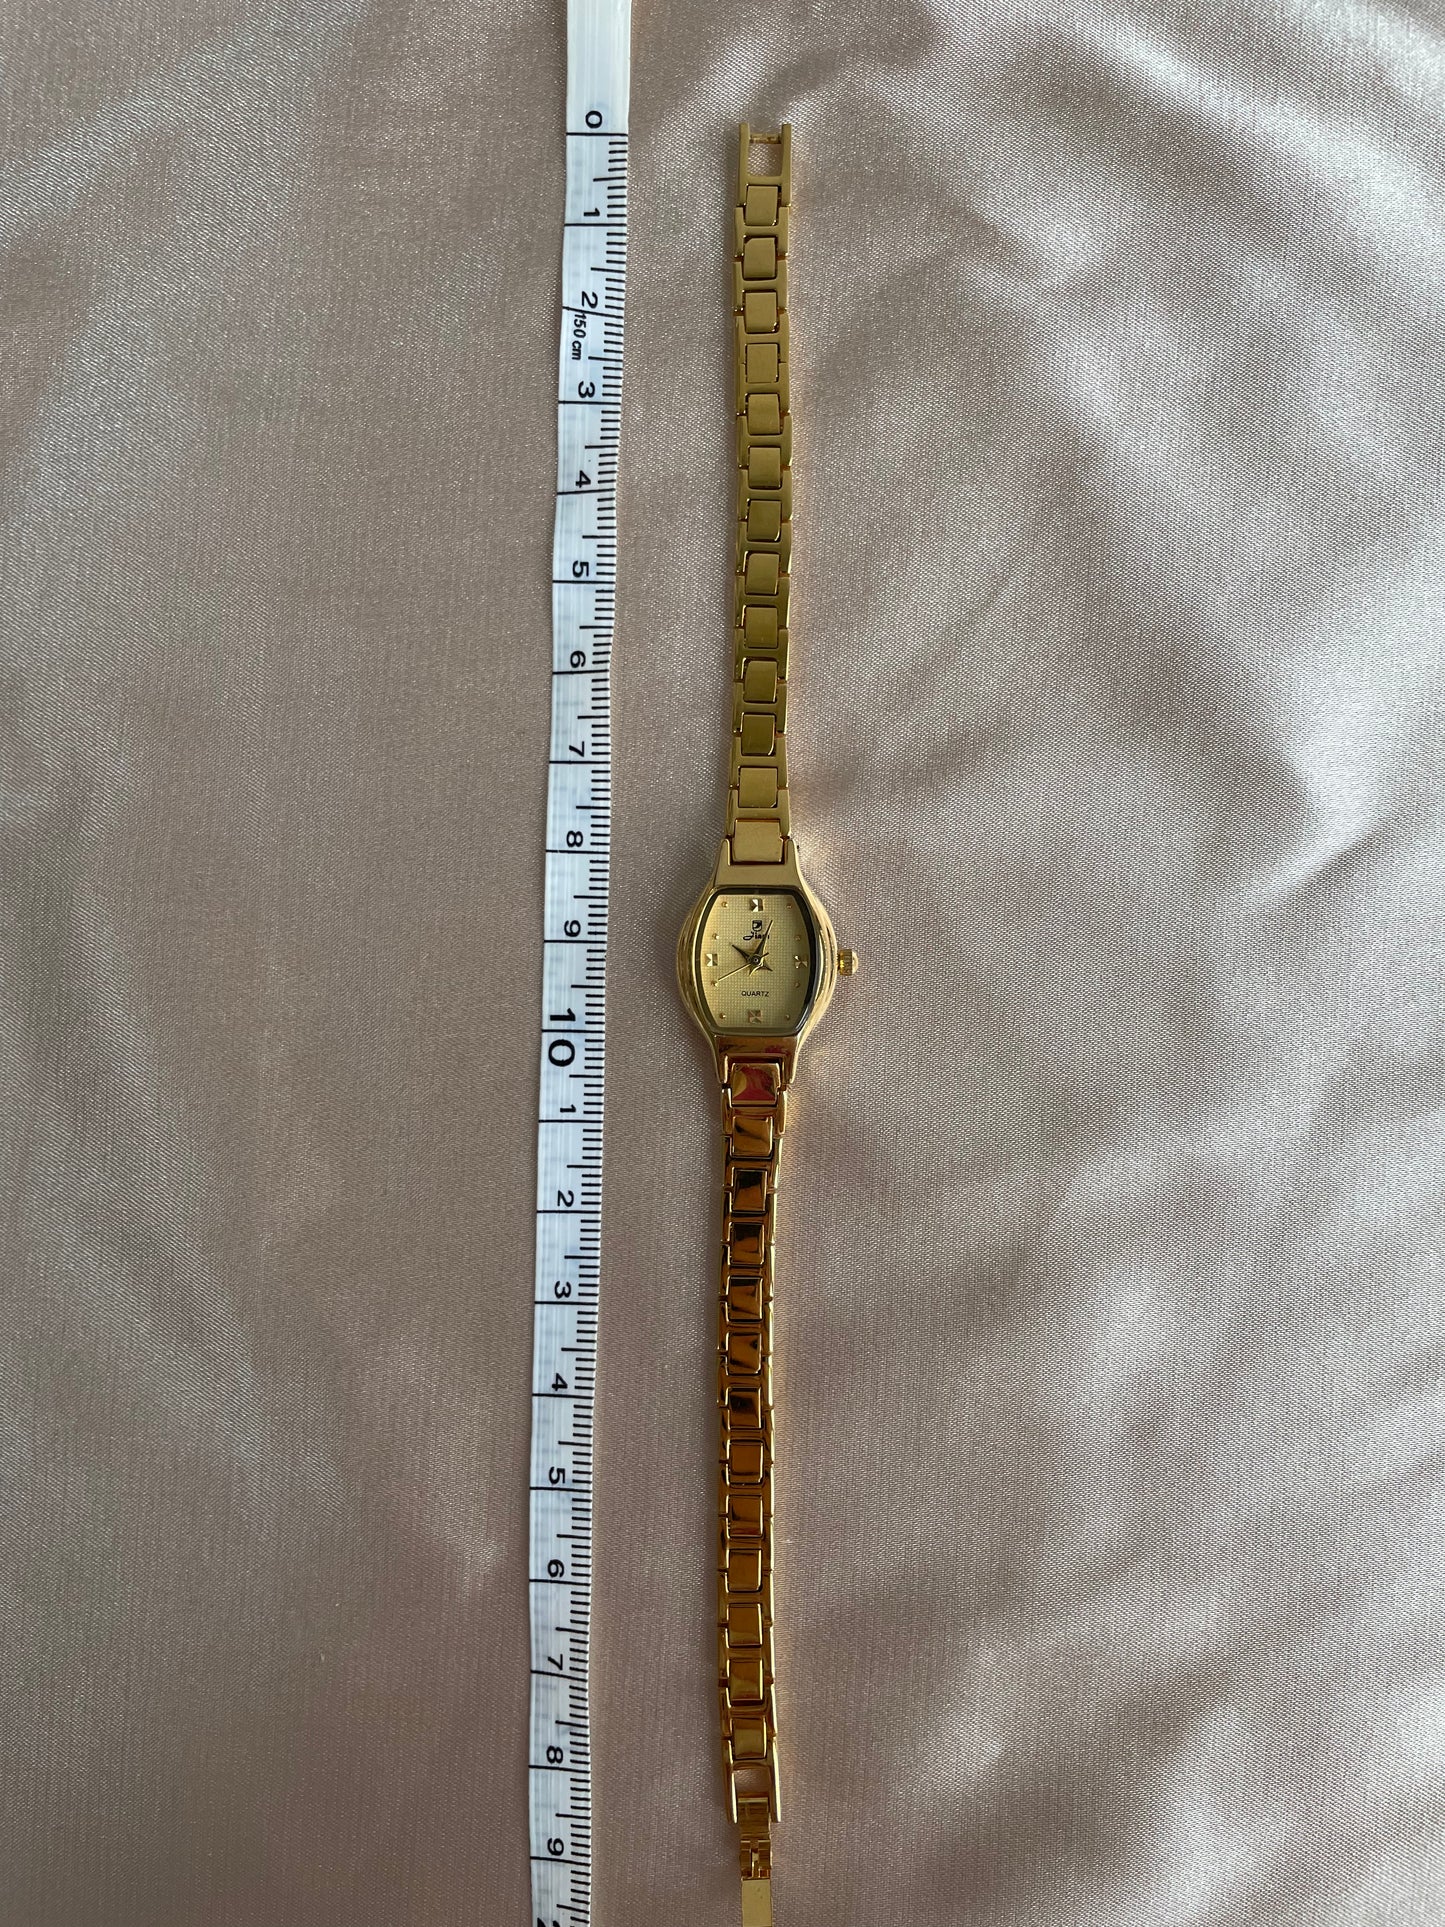 Vintage gold watch barrel shape dial